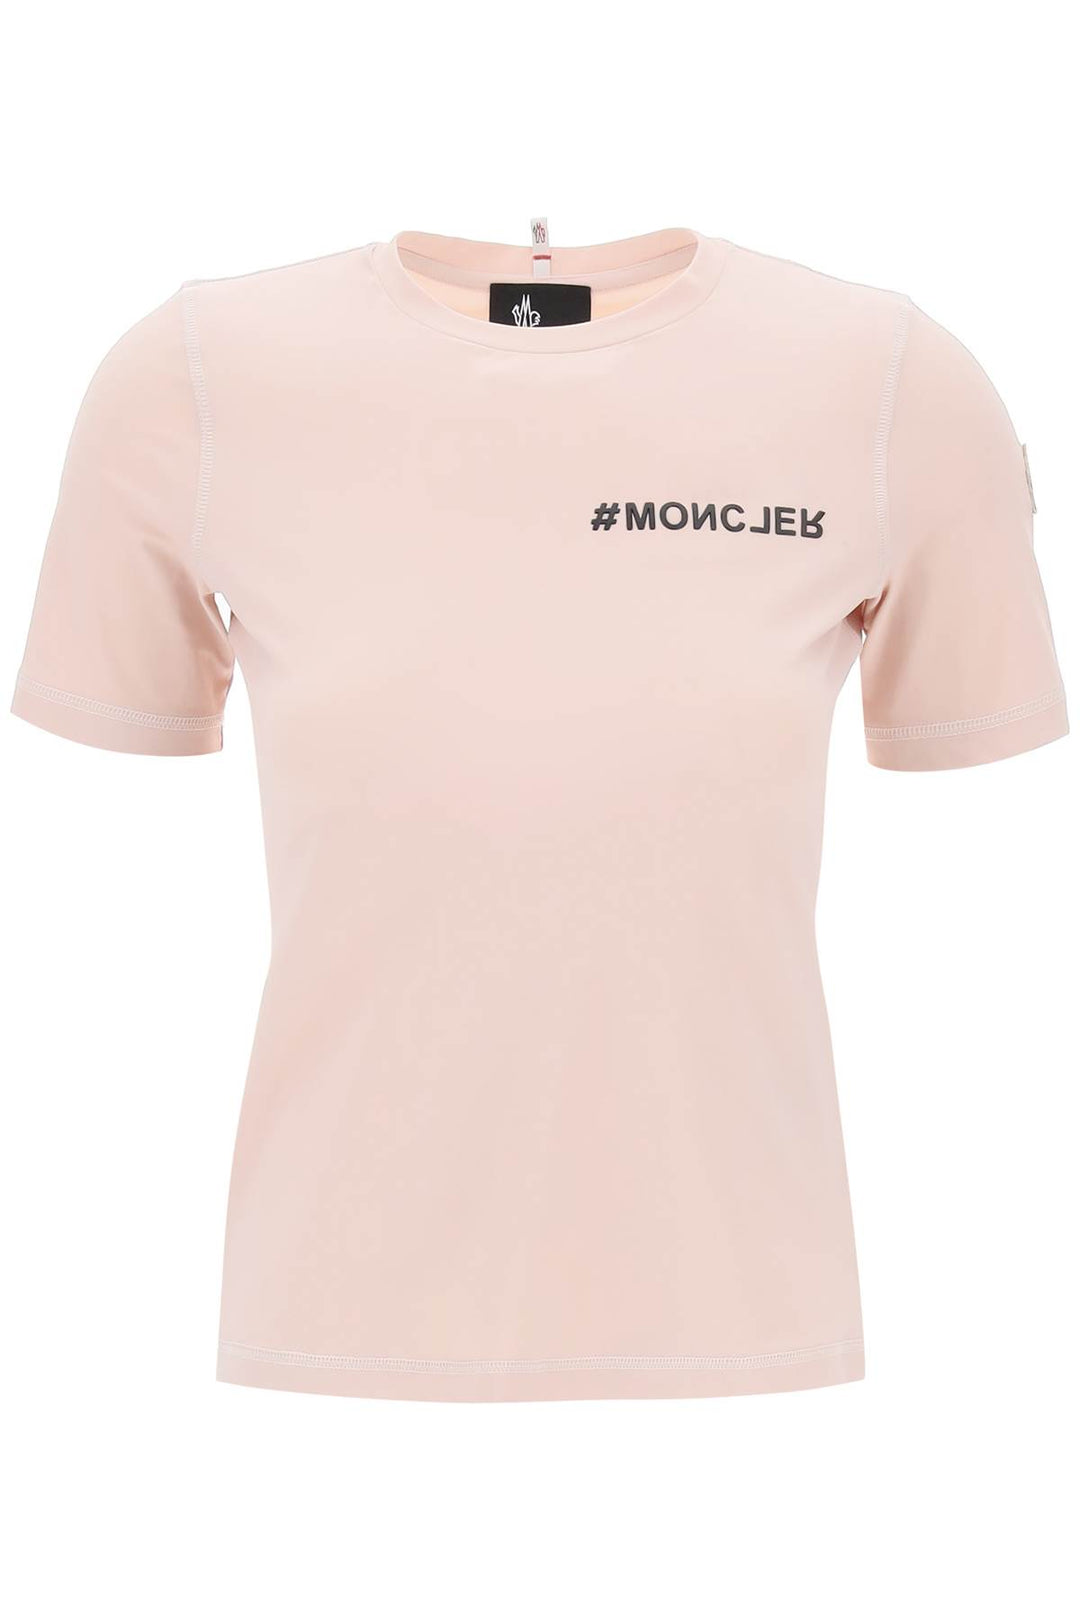 Moncler Grenoble Actiwear Crew Neck   Rosa